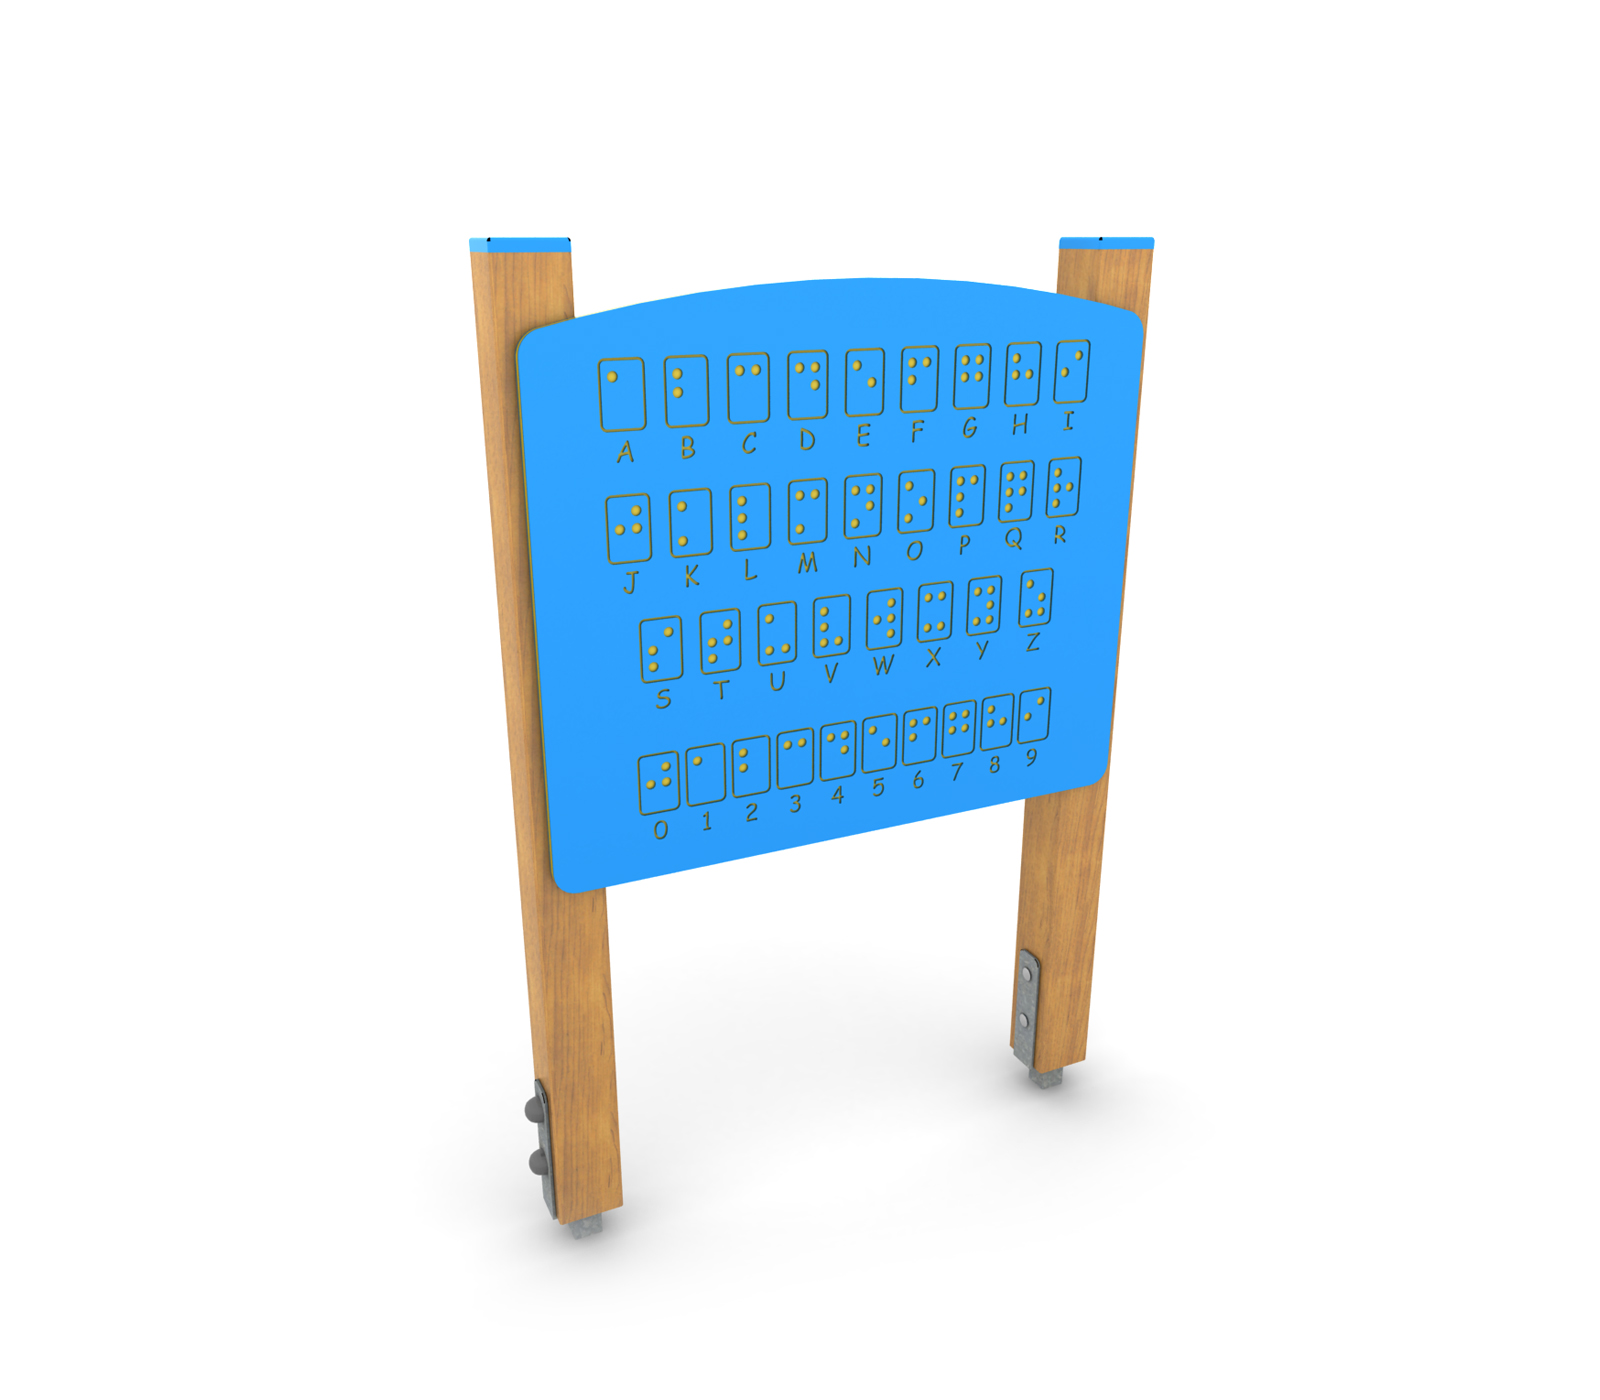 PED-17 Panel edukacyjny Tablica Braille'a do nauki play panels education interactive